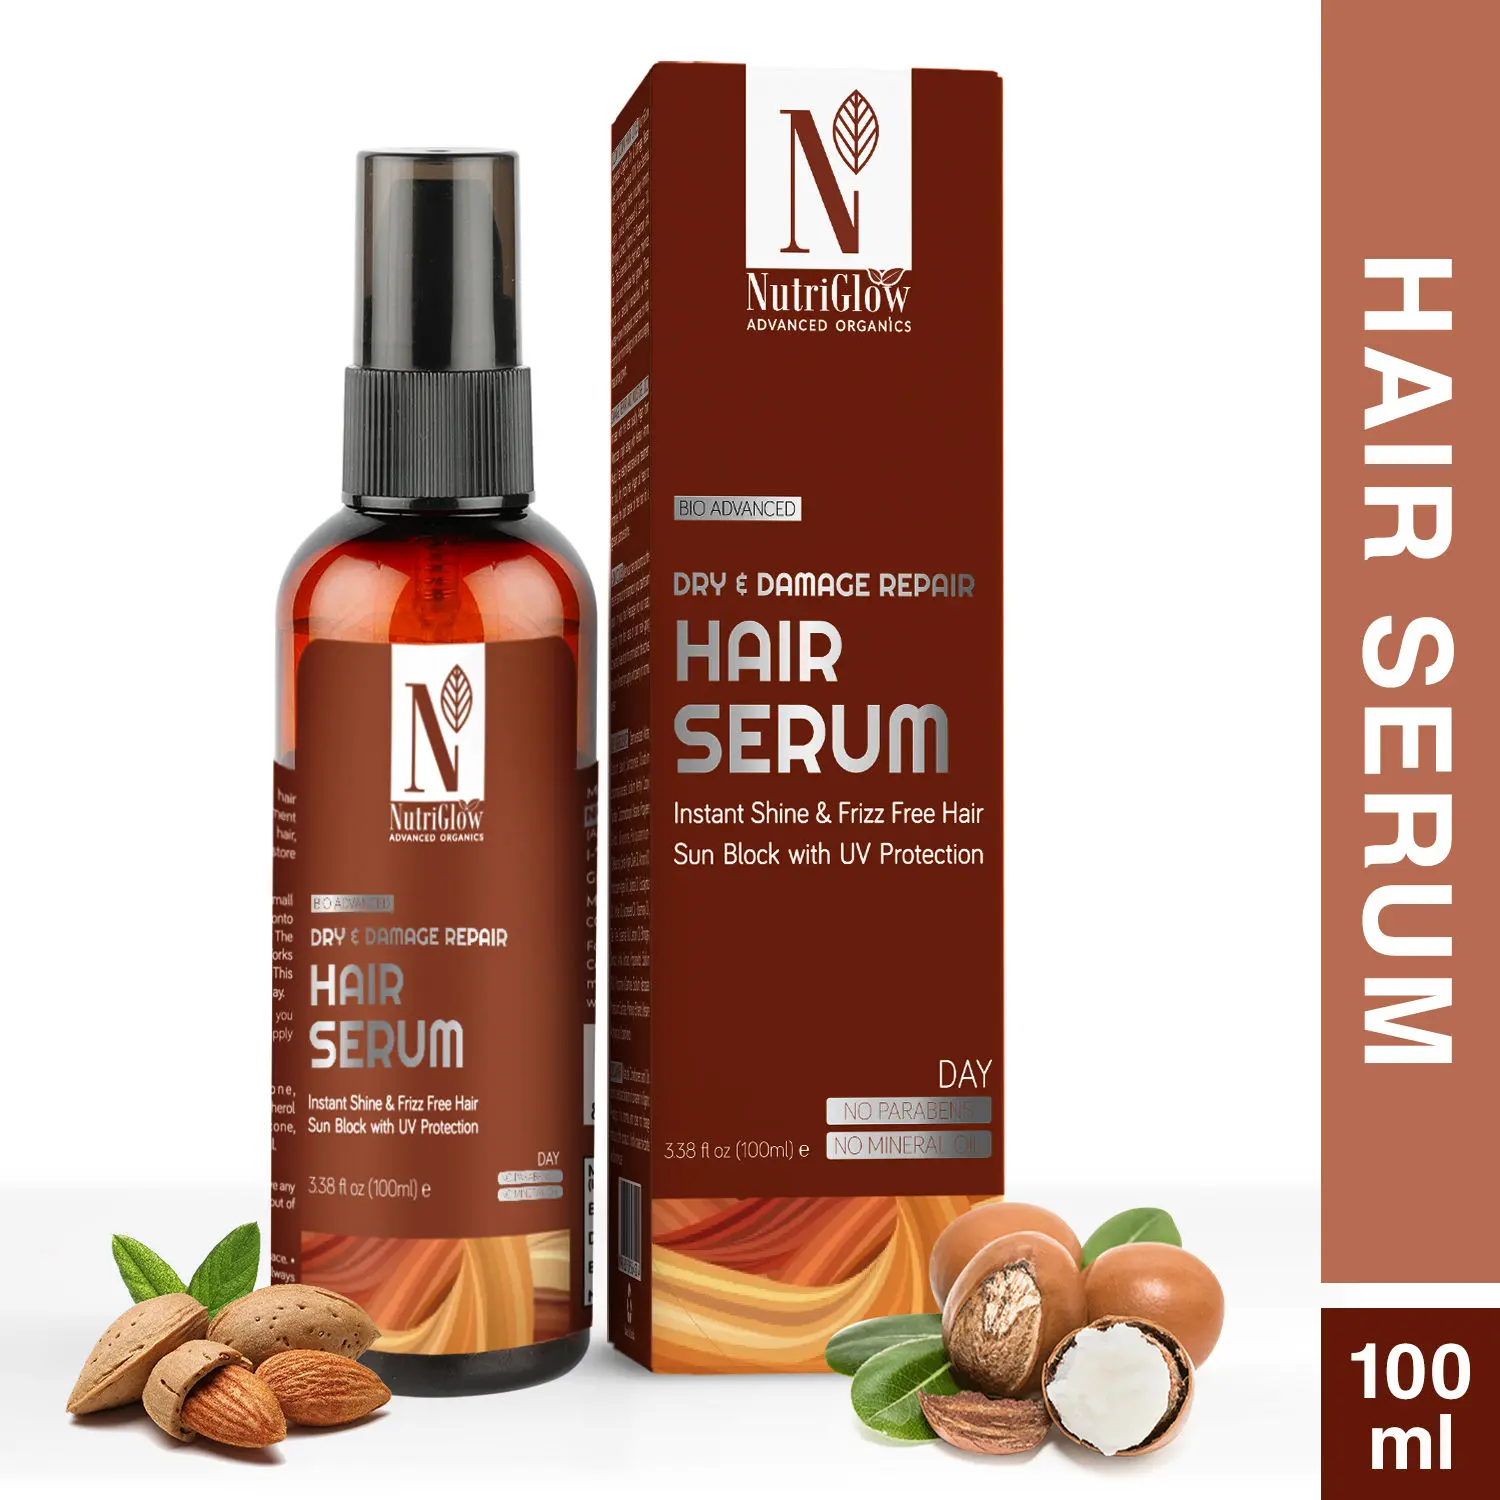 NutriGlow Advanced Organics Dry & Damage Repair Hair Serum For Damage Reverse & Moisture Lock Formulation, 100 ml